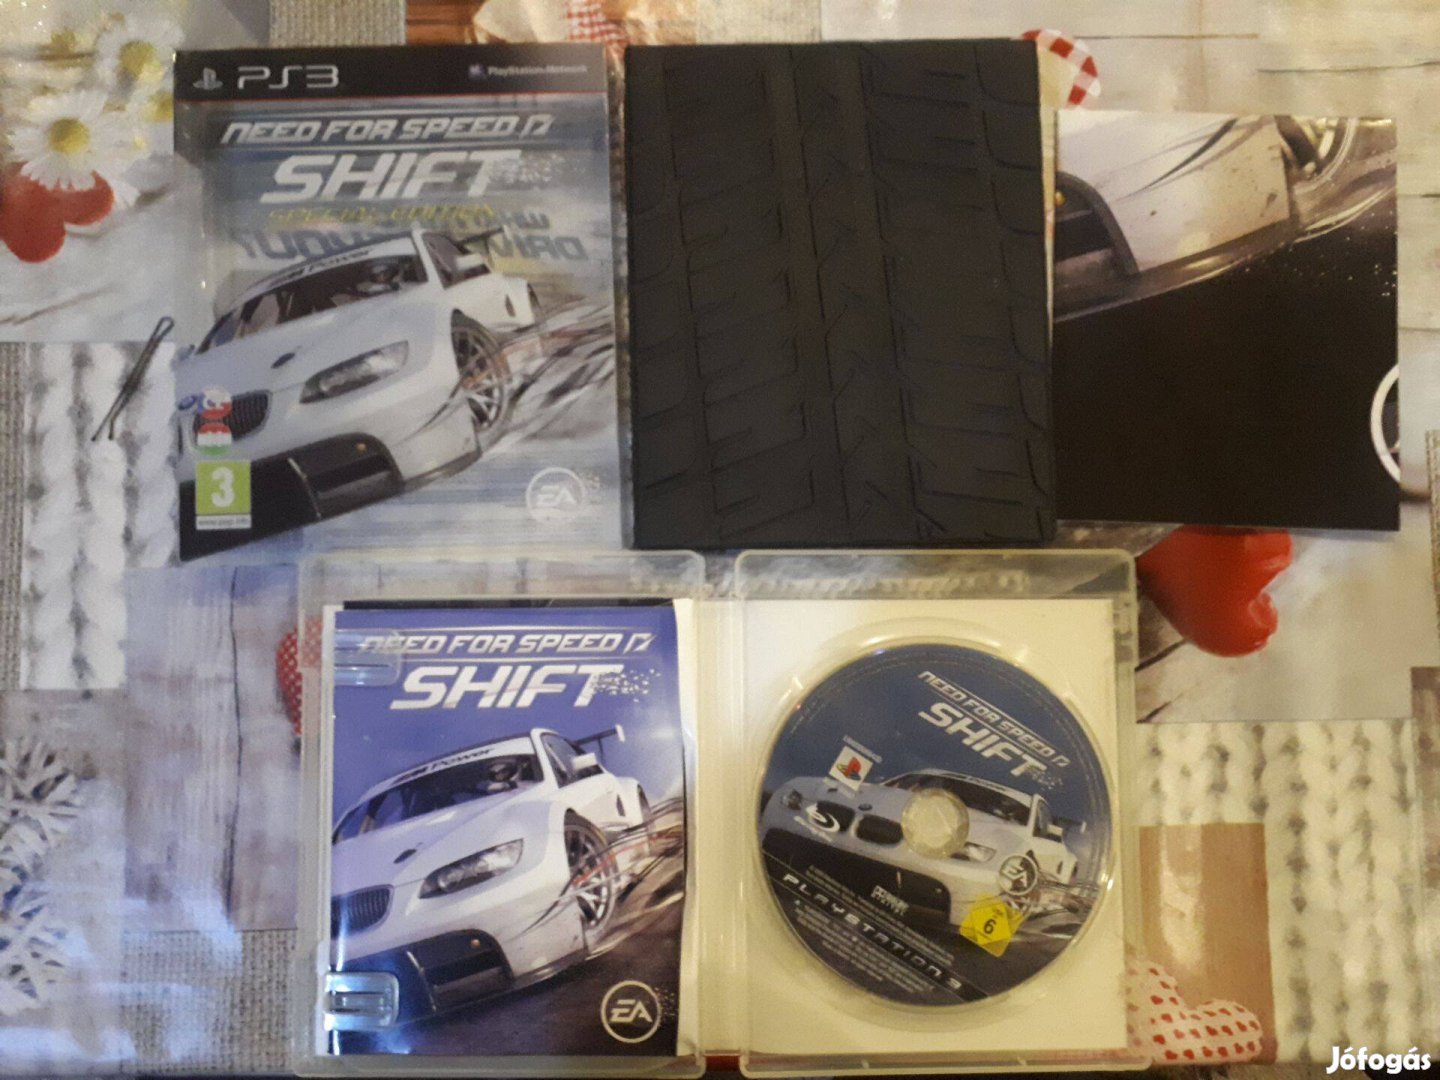 Need FOR Speed Shift Special Edition (magyar!) ps3 játék,eladó,csere i